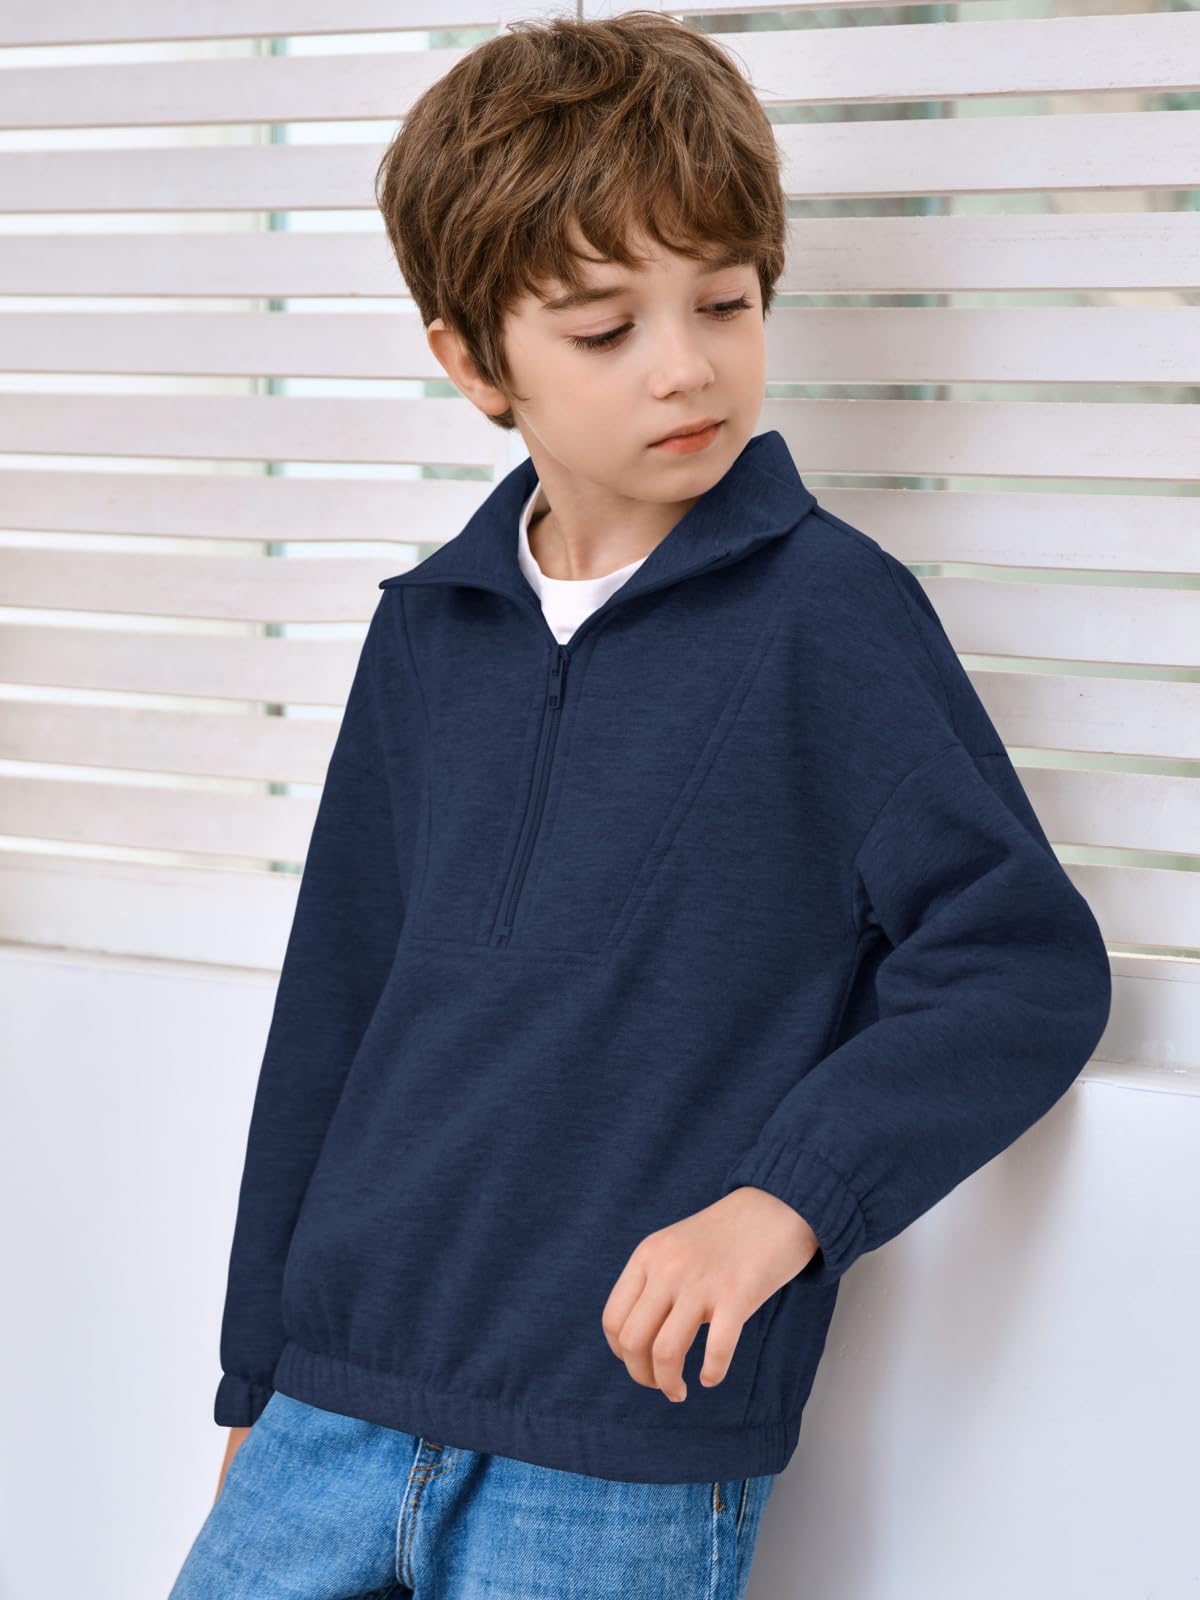 Haloumoning Boys Fleece Sweatshirt Half Zip Pullover Long Sleeve Stand Collar Fashion Tops 5-14 Years